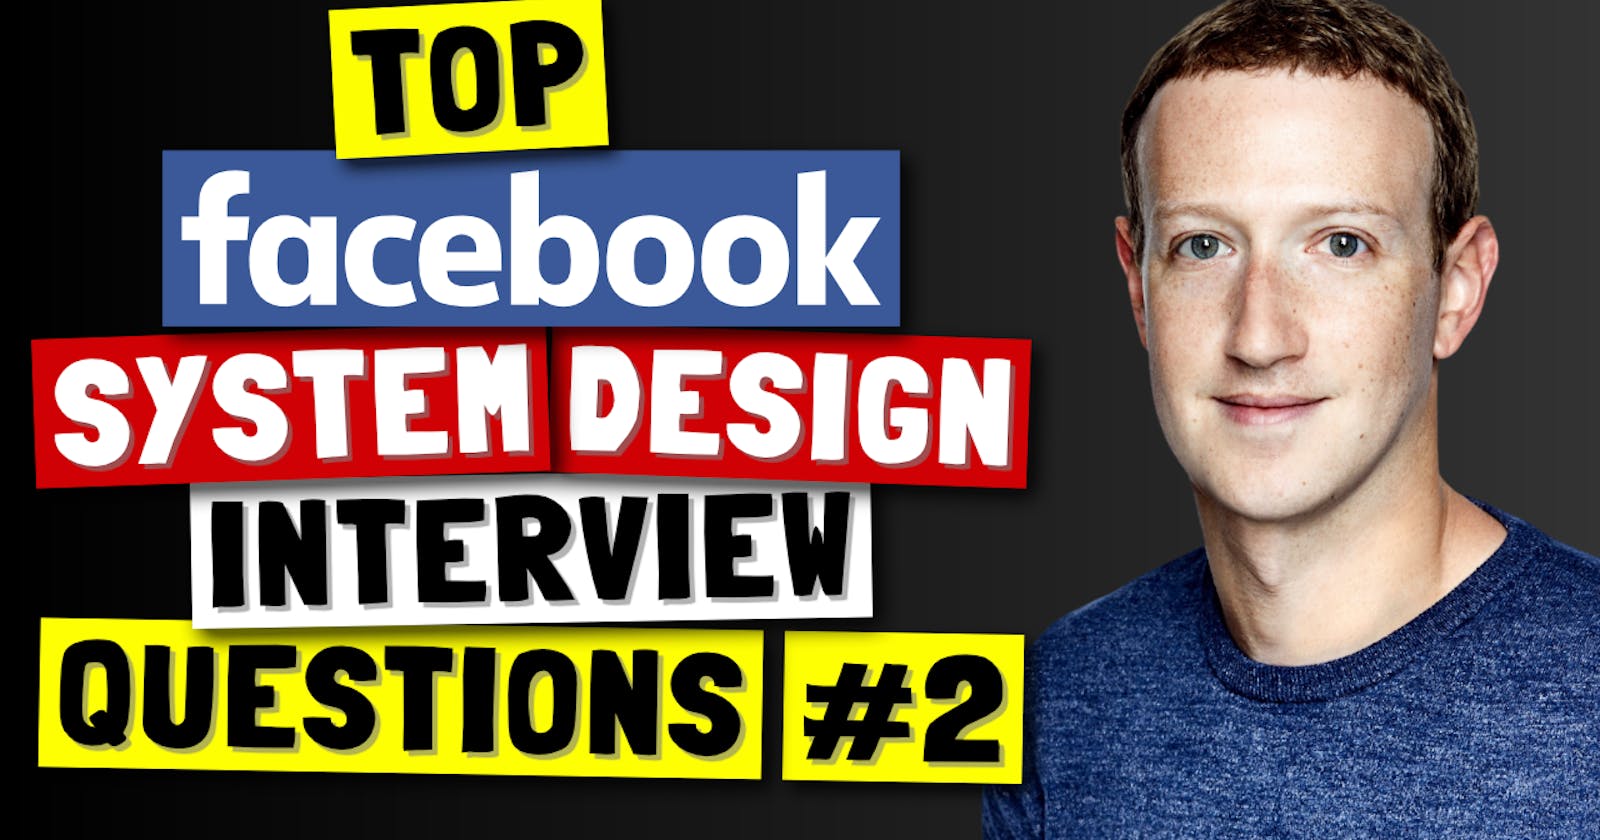 Top Facebook System Design Interview Questions (Part 2)